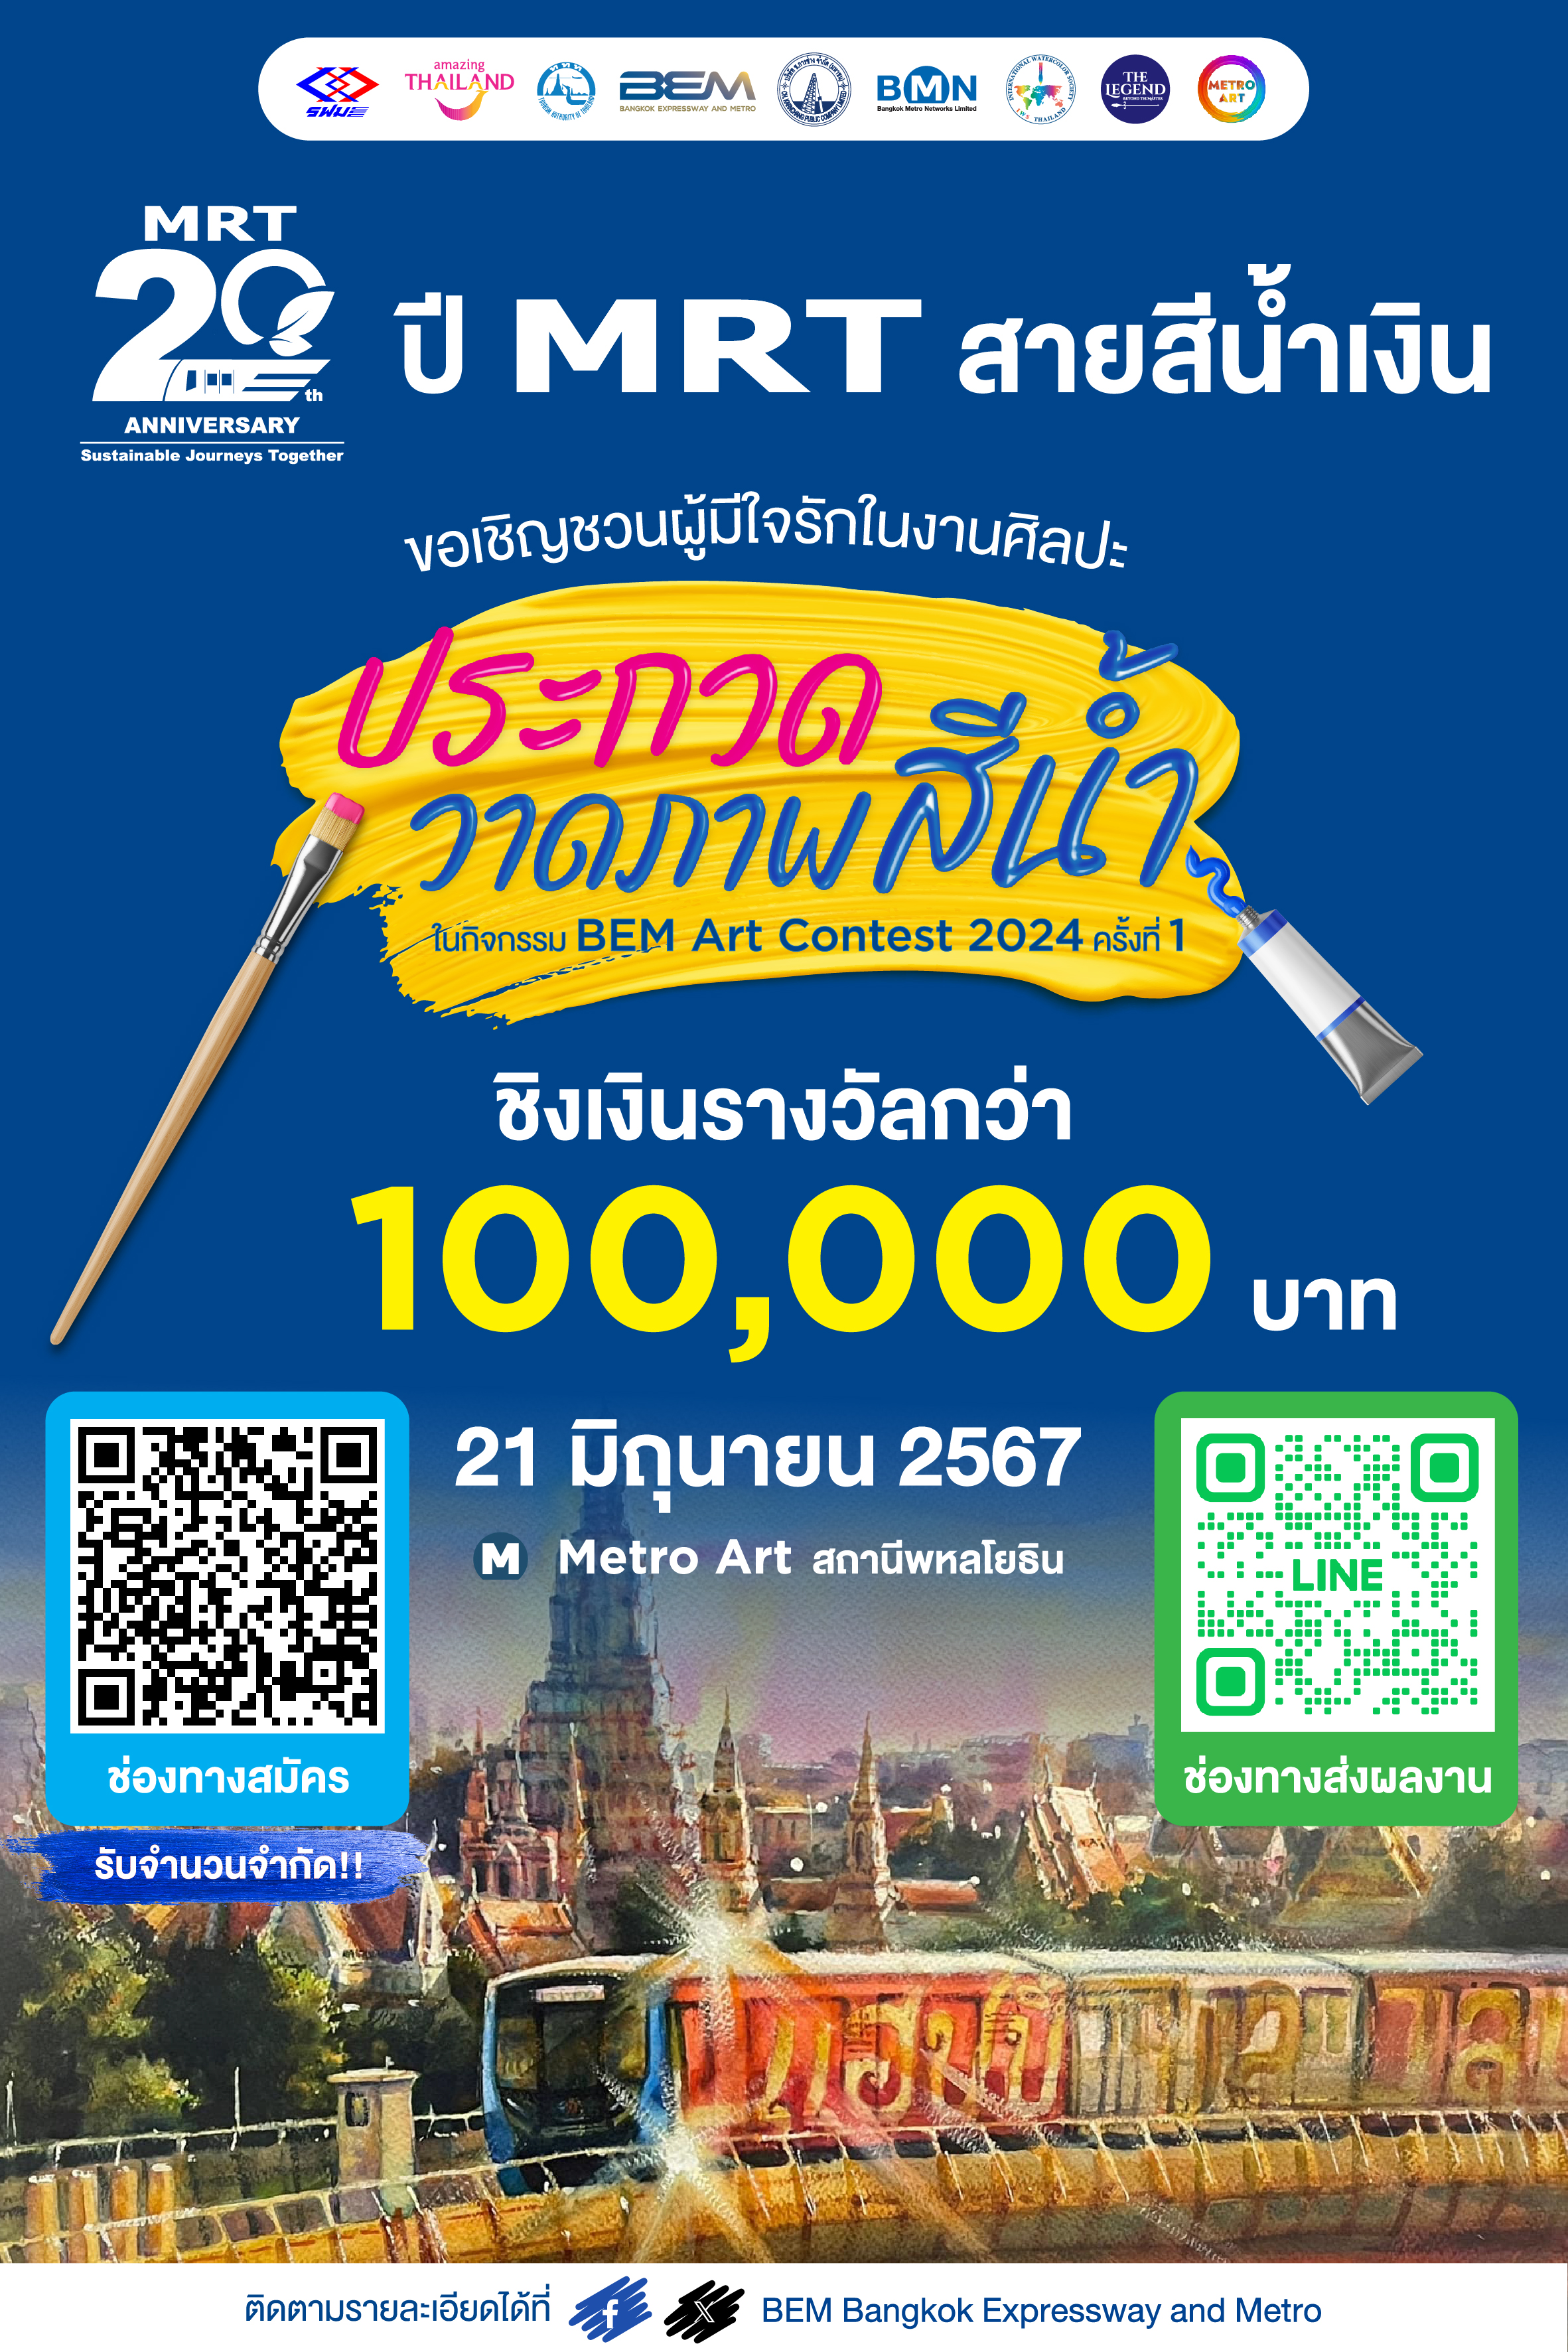 BEM Art Contest ครั้งที่ 1 ประจำปี 2567  “20 ปี Anniversary MRT สายสีน้ำเงิน”